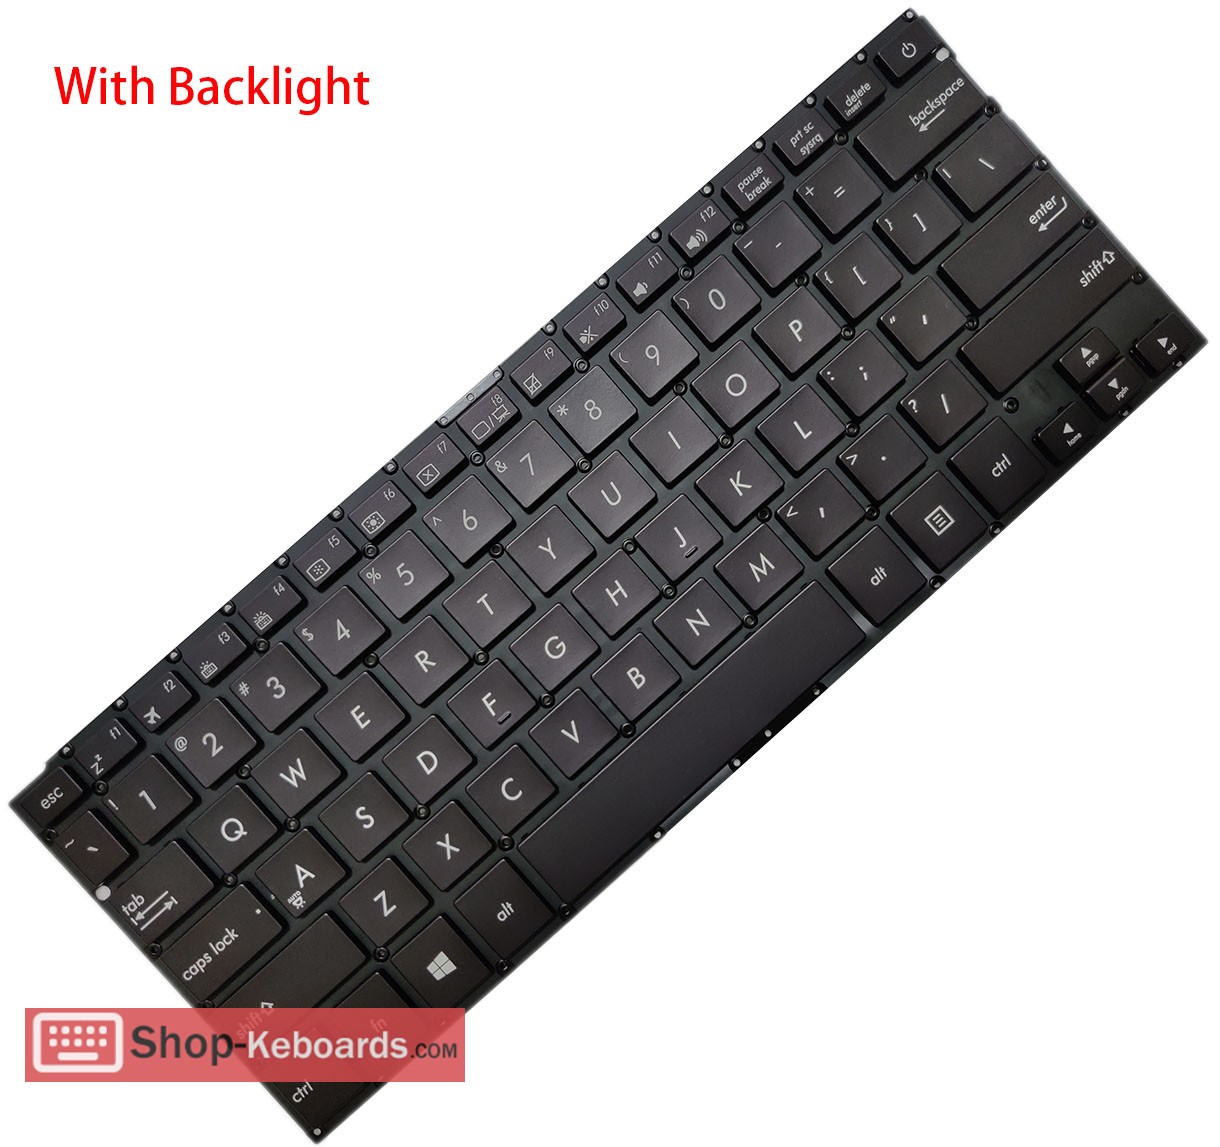 Asus ZENBOOK zenbook-ux410ua-gv334t-GV334T  Keyboard replacement